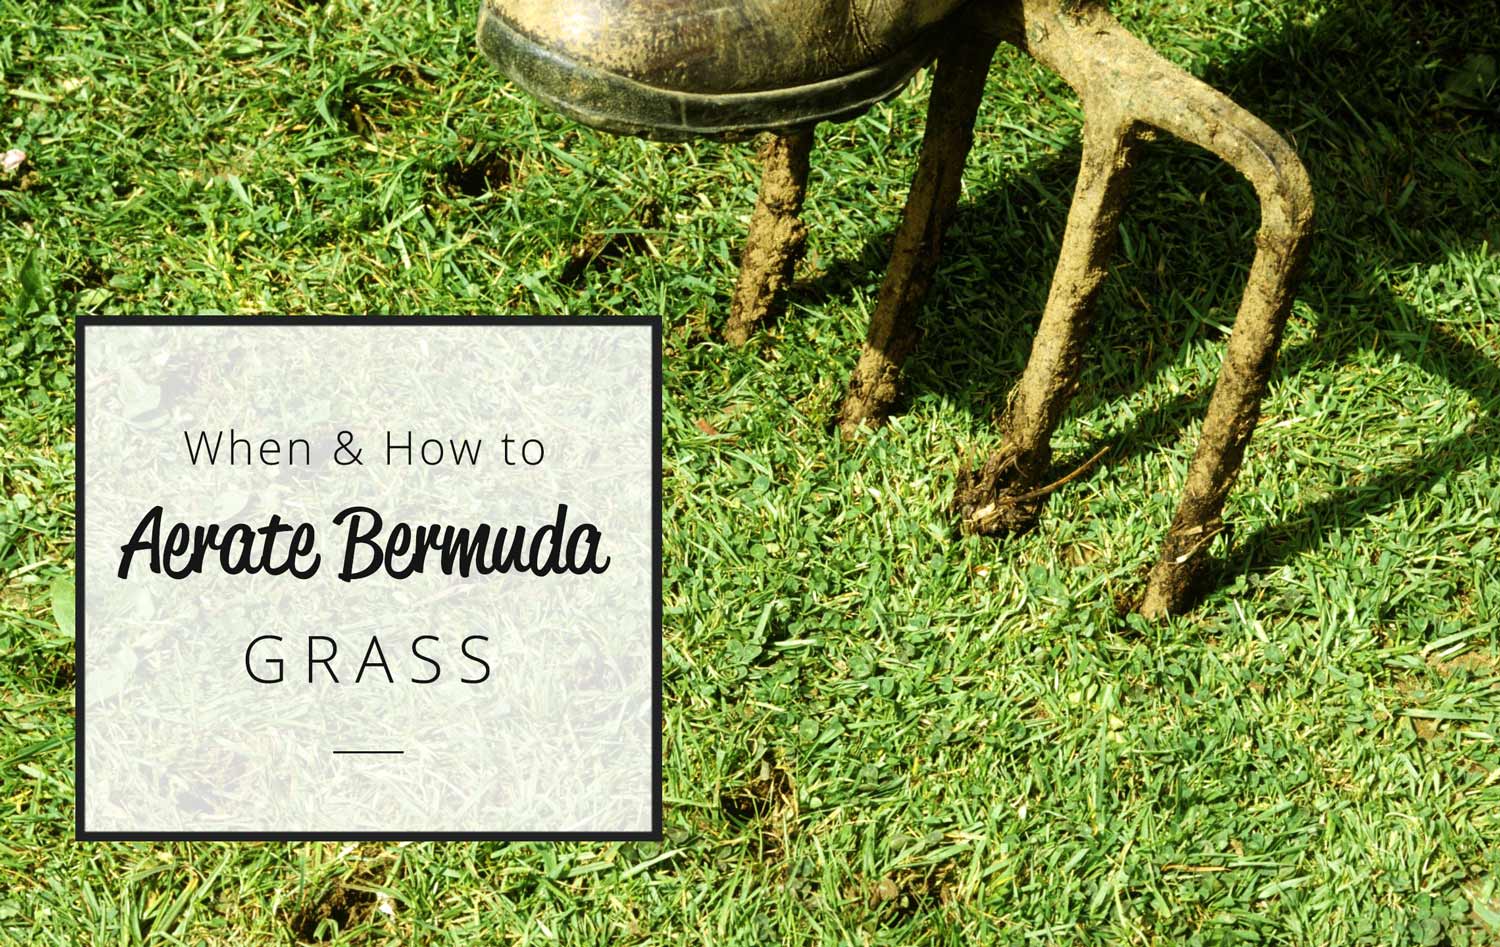 Aerating bermuda grass with a folk close up